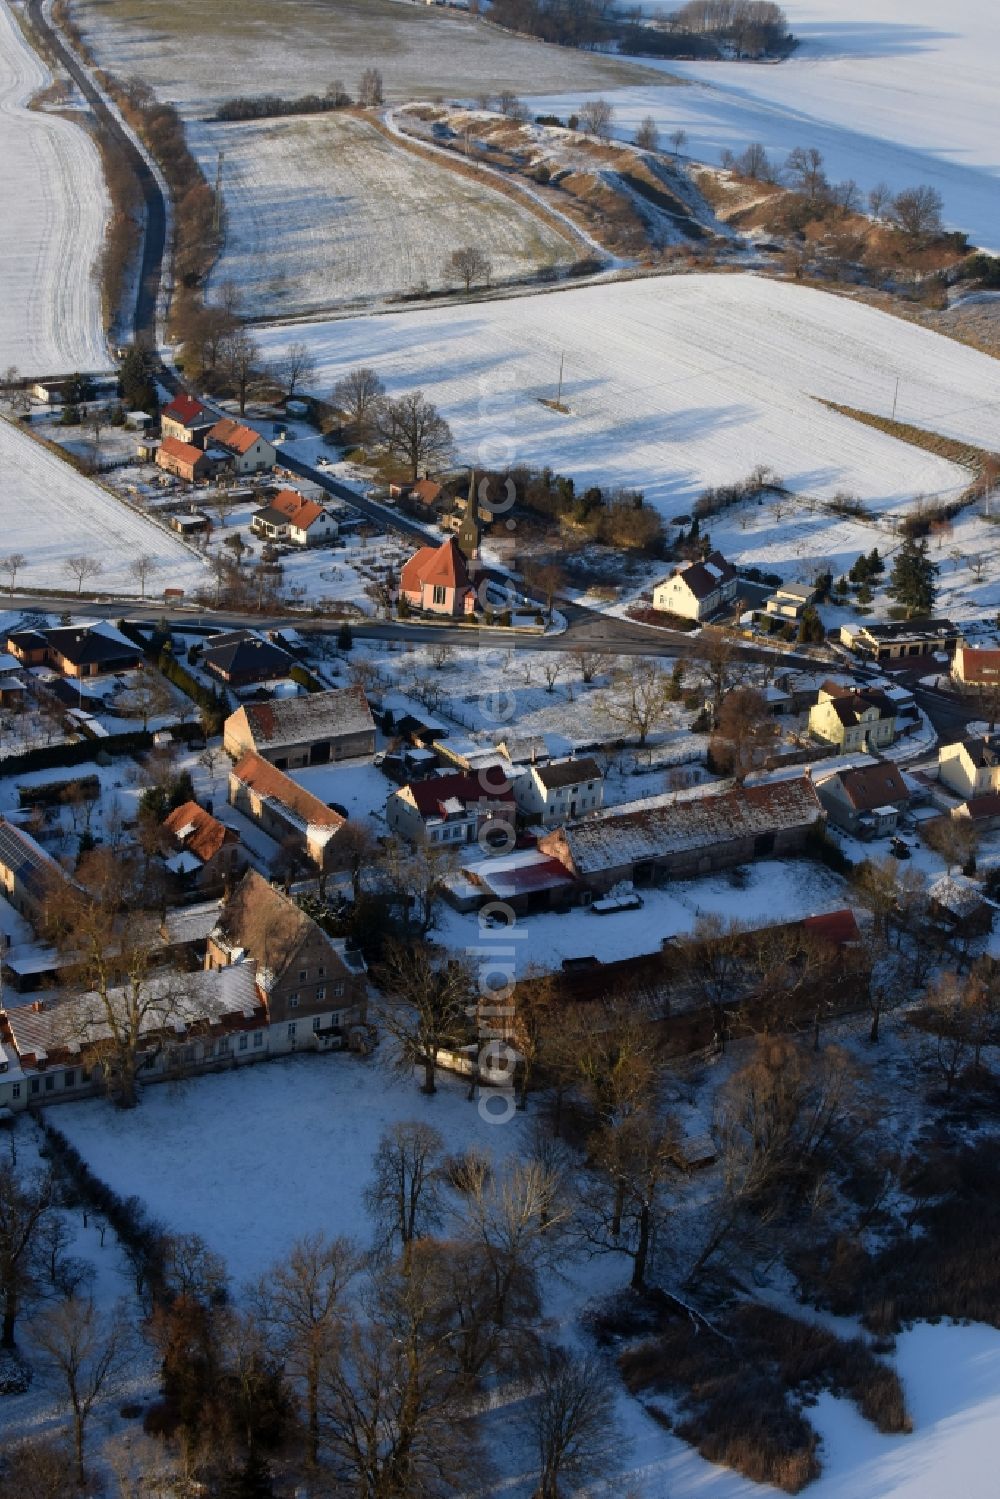 Aerial image Päwesin - Wintry snowy village view in Bagow in the state Brandenburg